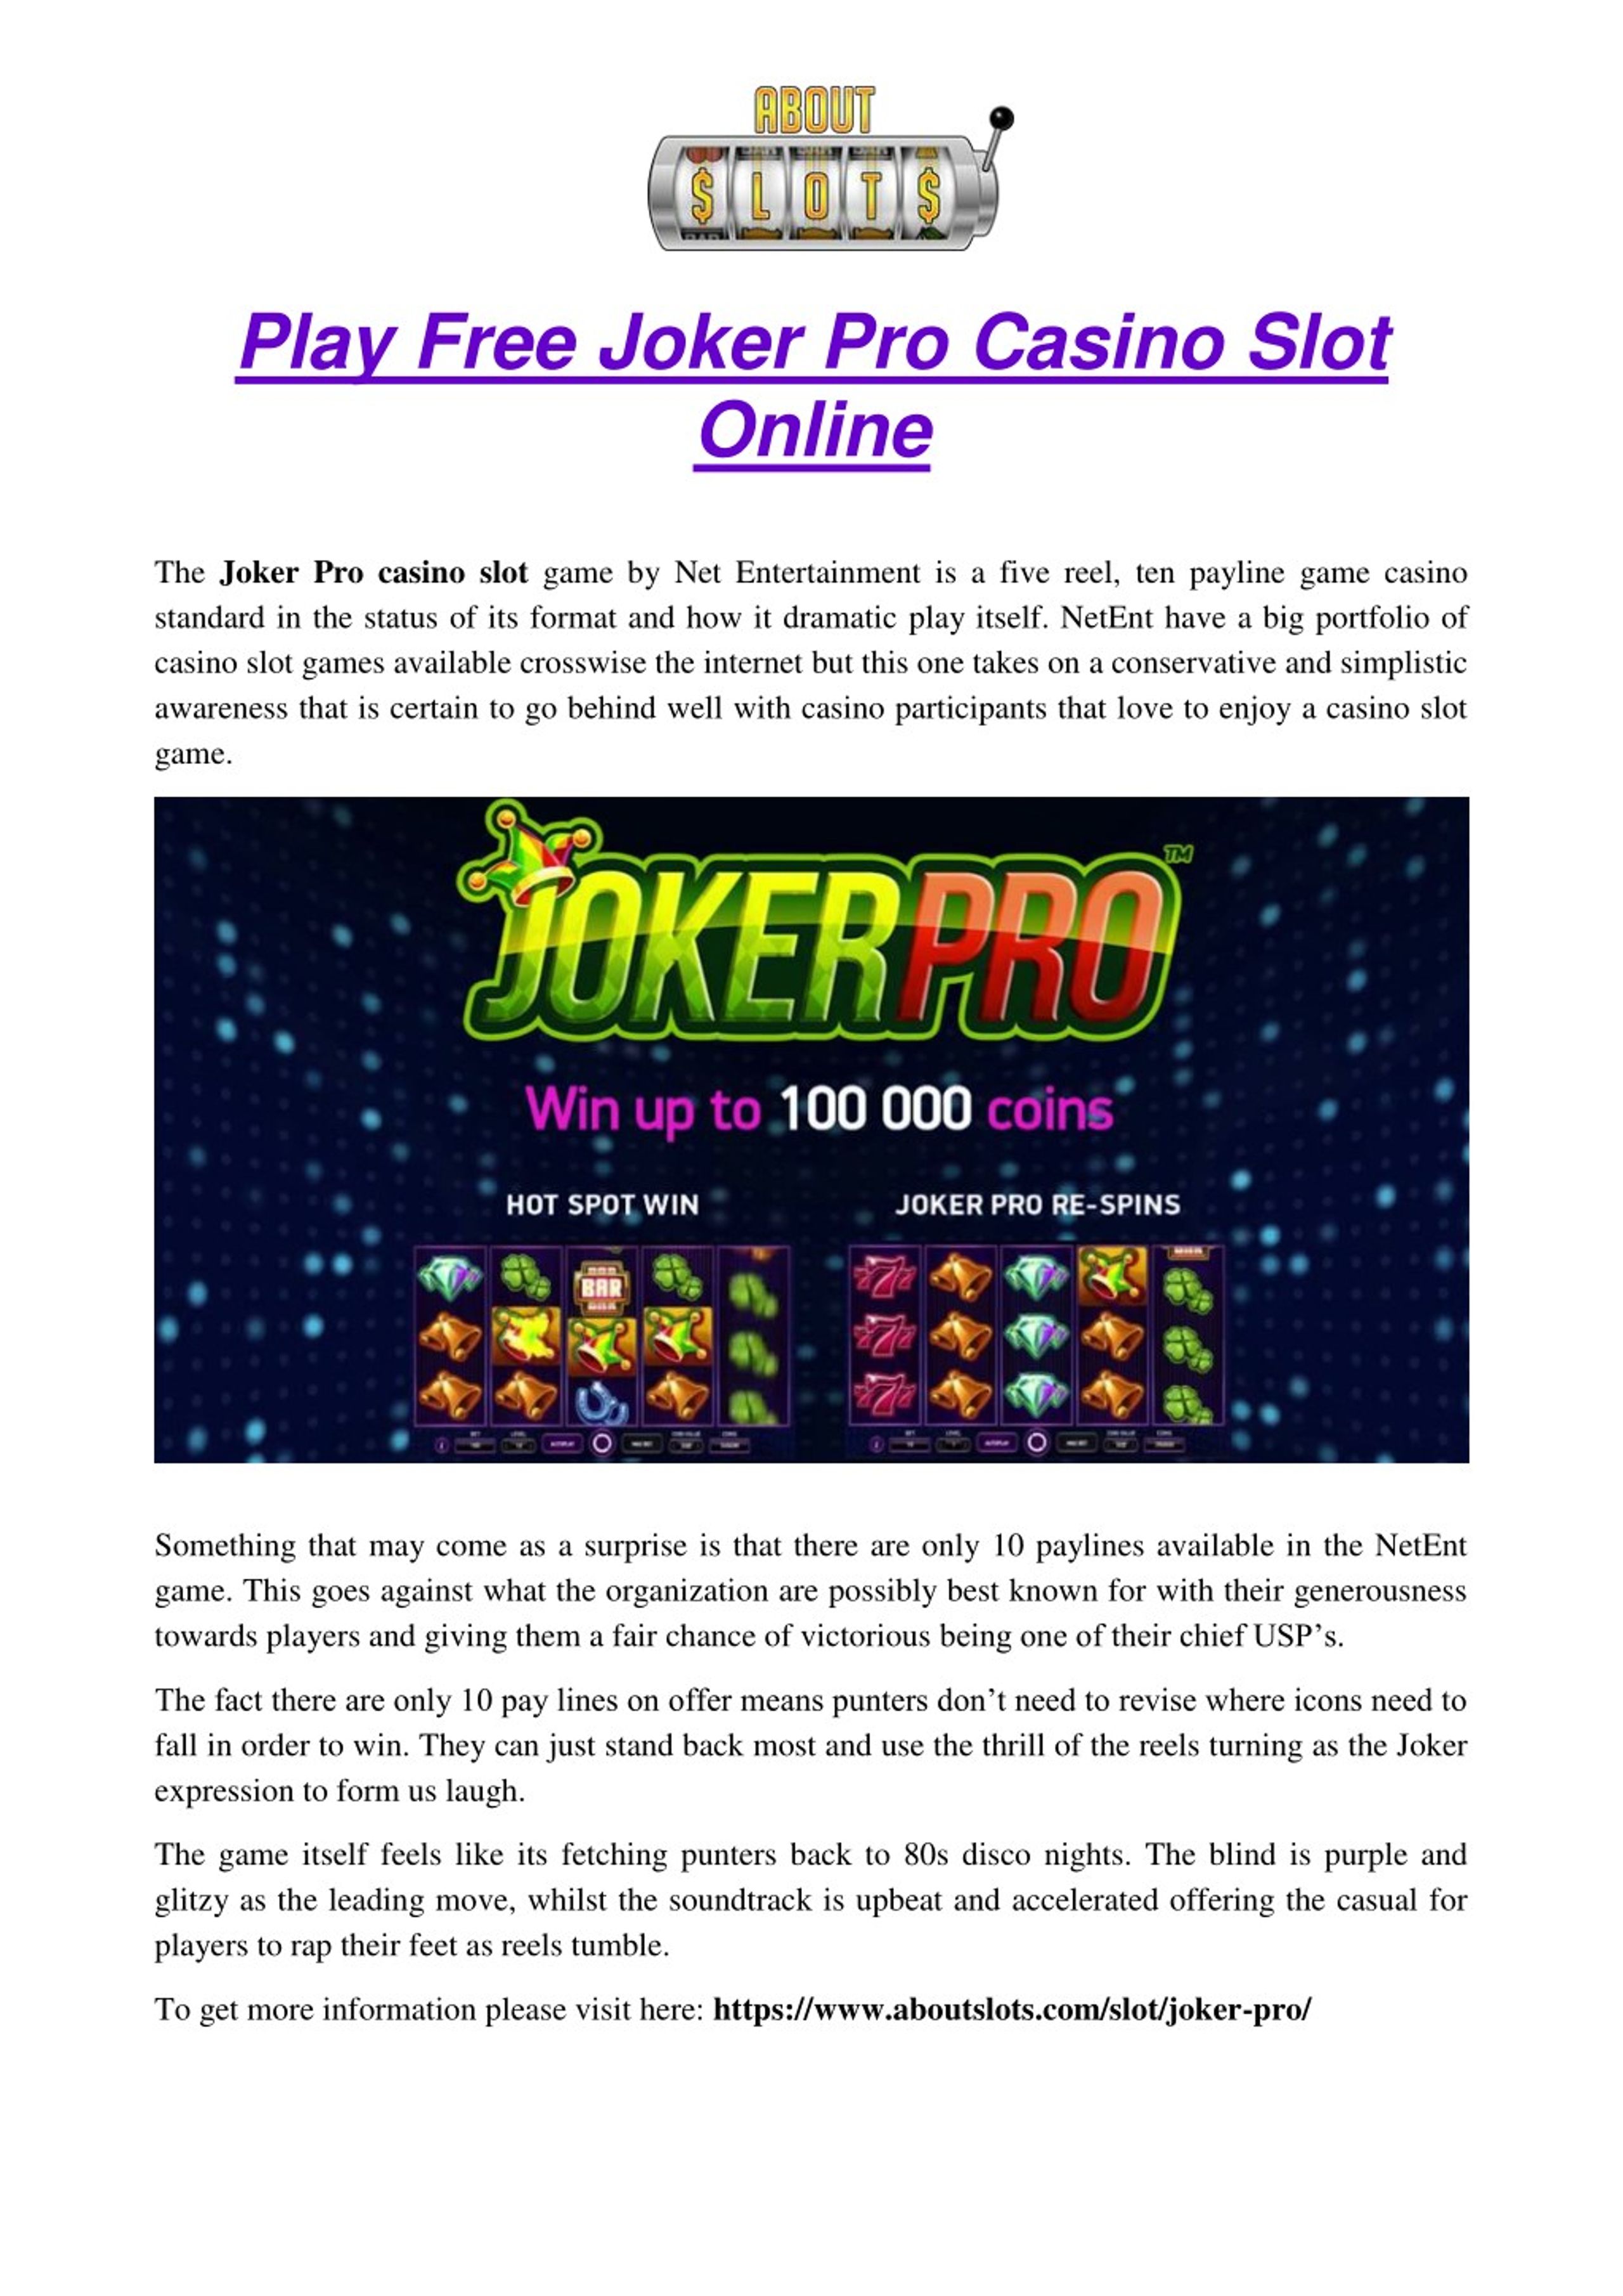 Ppt Play Free Joker Pro Casino Slot Online Powerpoint Presentation Free Download Id 7757667